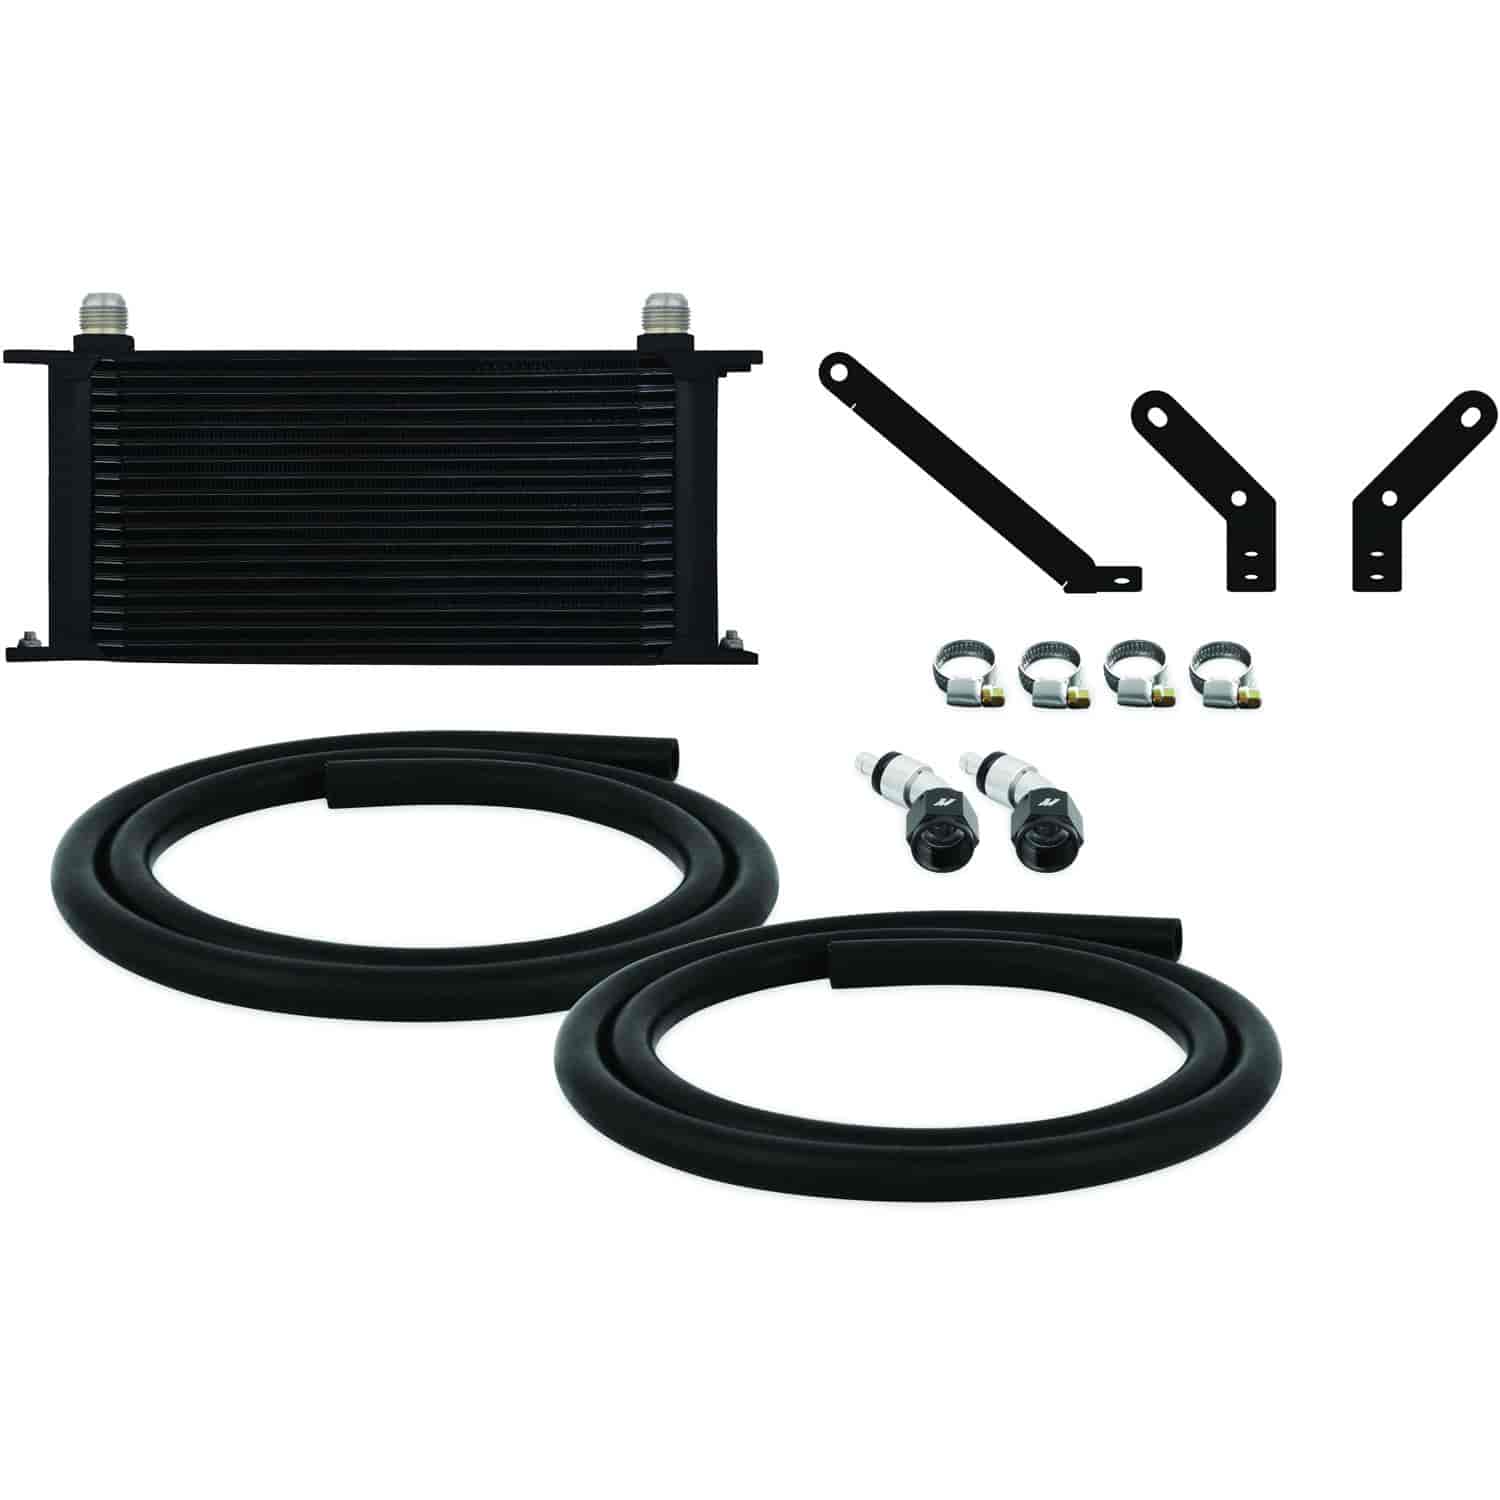 Subaru WRX CVT Transmission Cooler - MFG Part No. MMTC-WRX-15BK